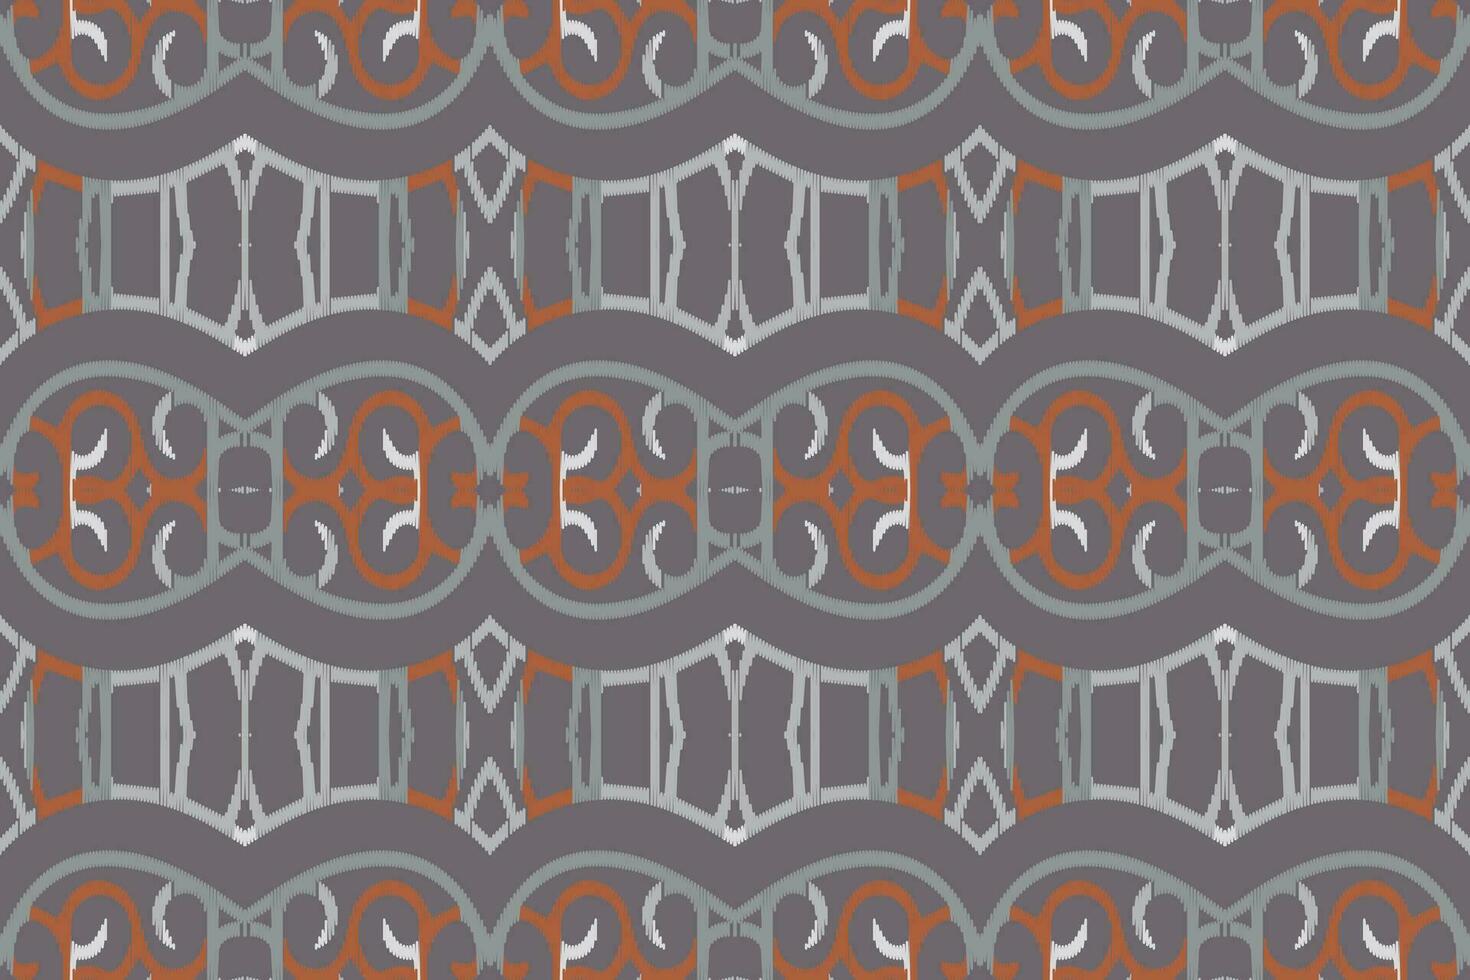 ikat damasco cachemir bordado antecedentes. ikat diamante geométrico étnico oriental modelo tradicional. ikat azteca estilo resumen diseño para impresión textura,tela,sari,sari,alfombra. vector